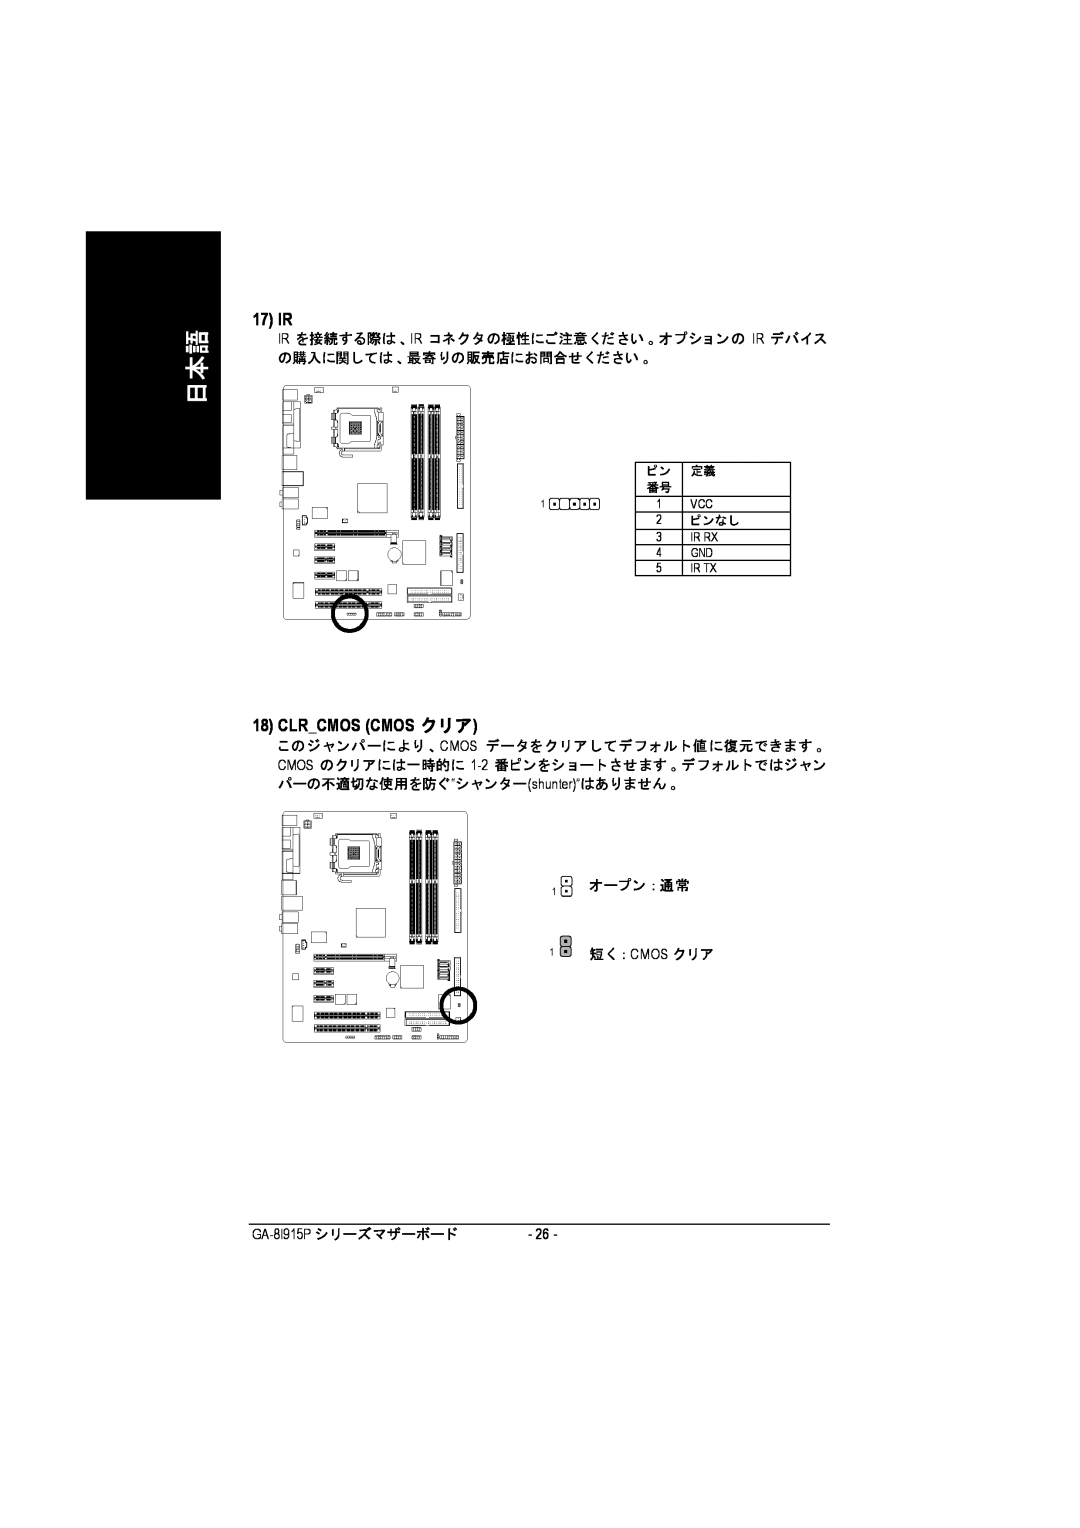 Intel GA-8I915P manual 17 IR, Clrcmos Cmos クリア 